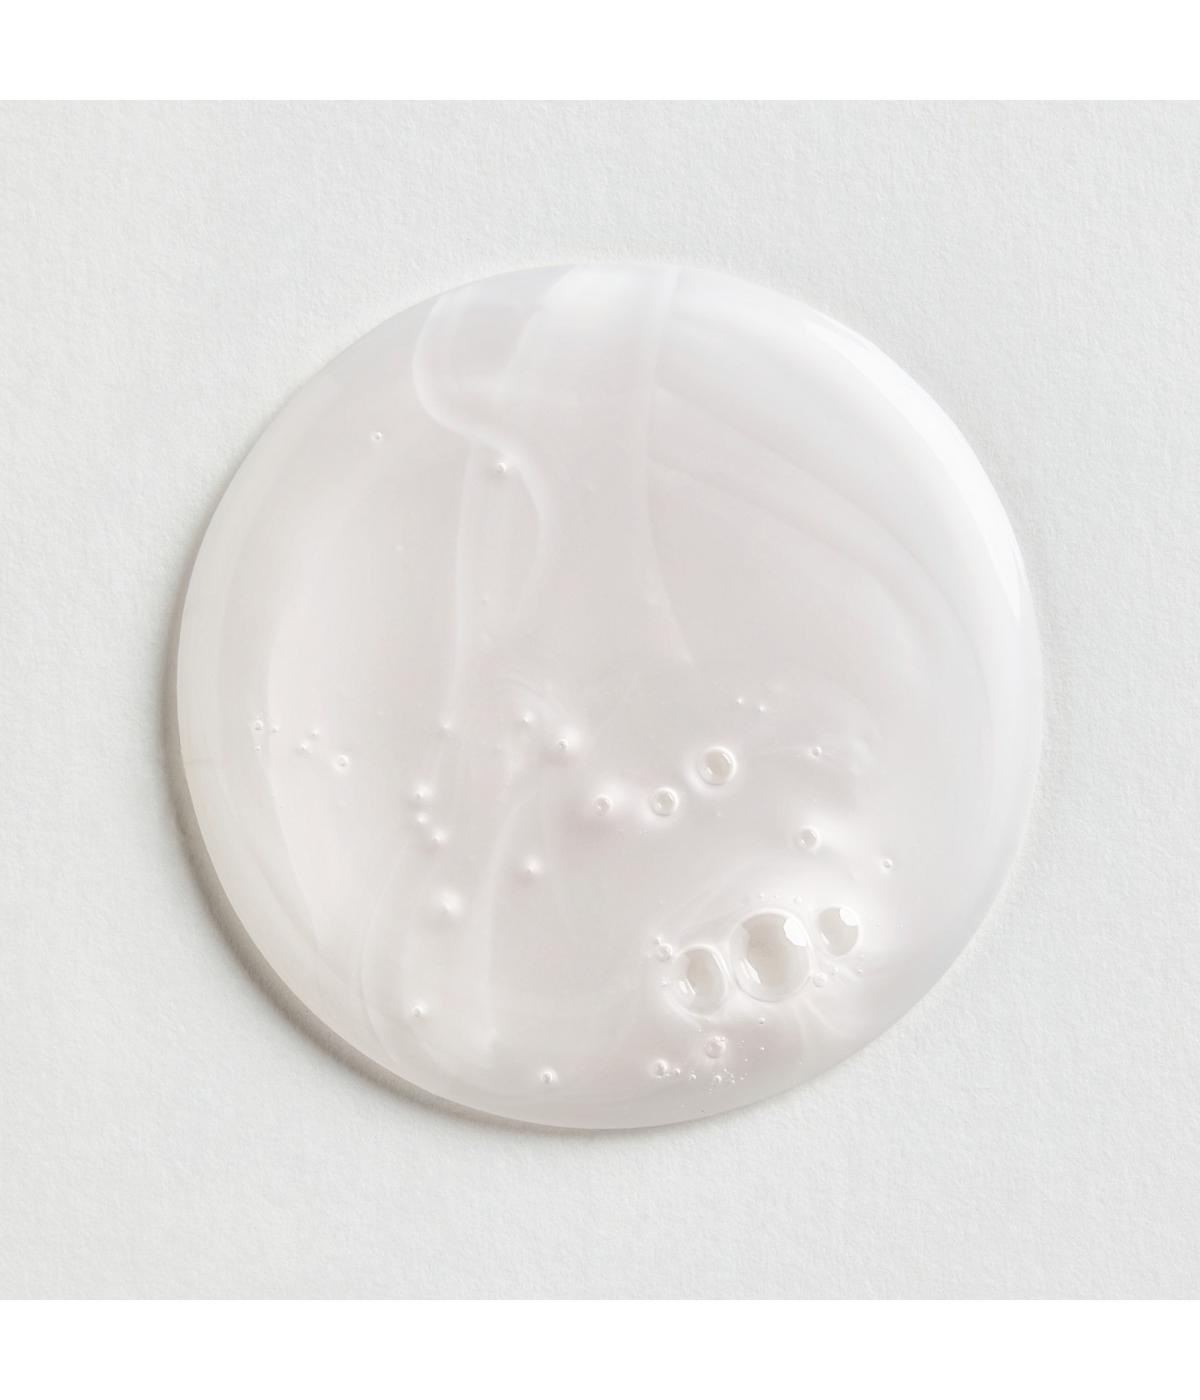 NIVEA Pampering Body Wash - Coconut & Almond Milk; image 4 of 4